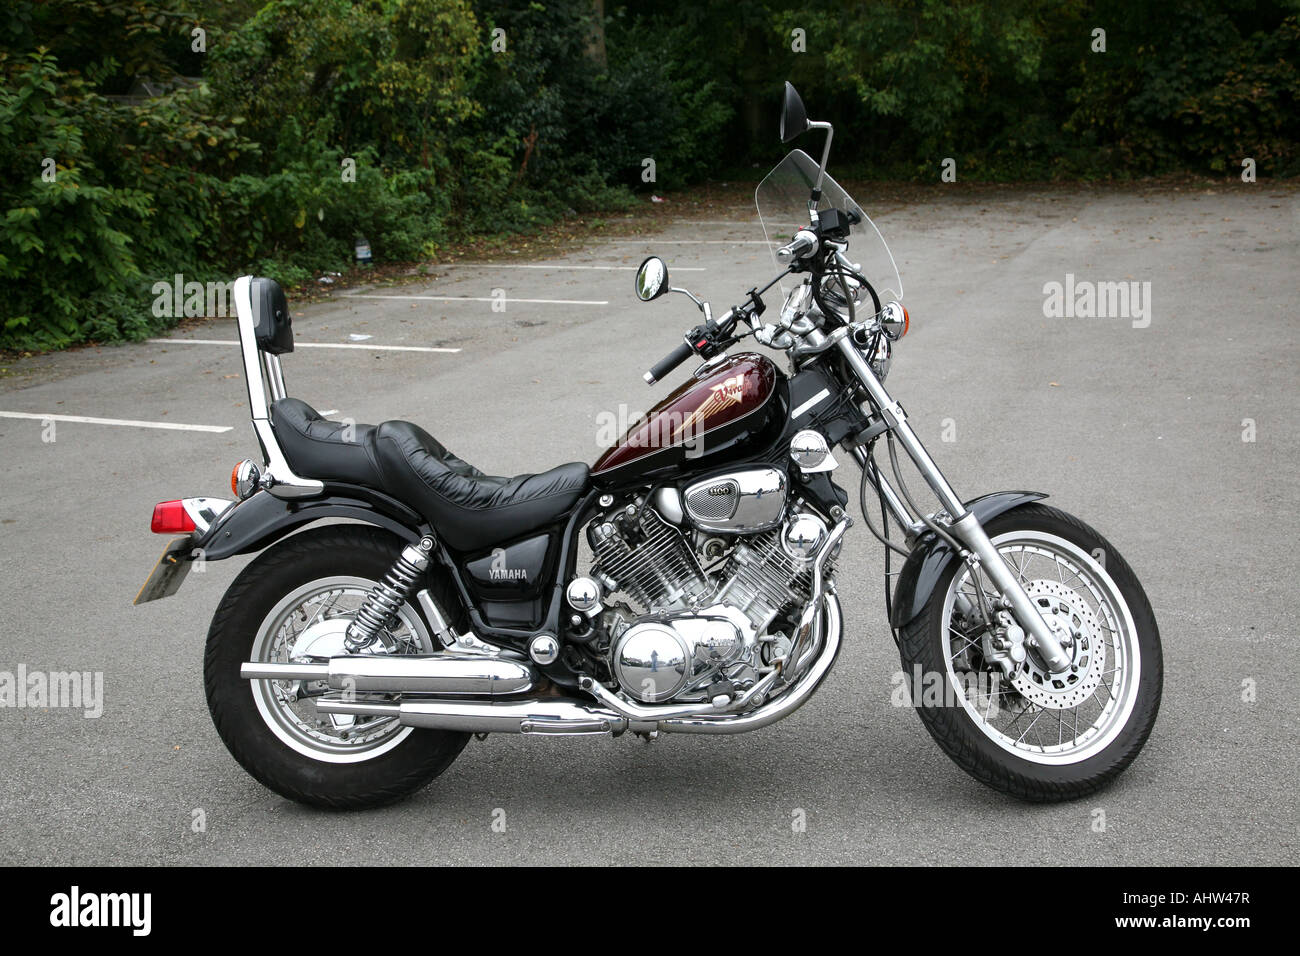 A Yamaha Virago 1100 Motorcycle Stock Photo - Alamy